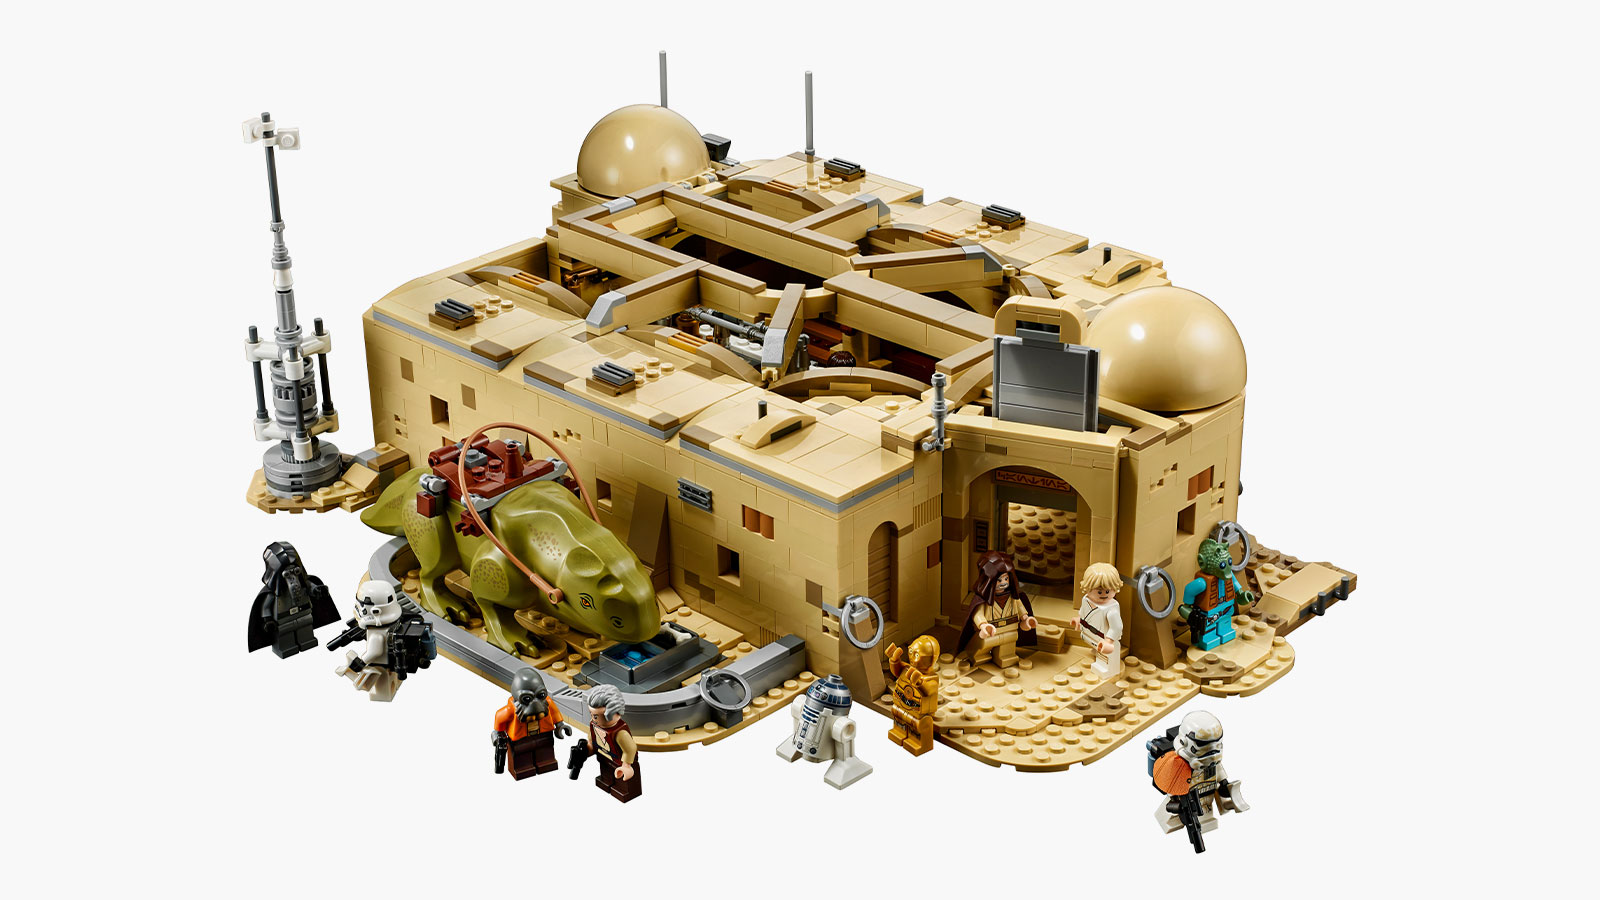 LEGO Star Wars Mos Eisley Cantina Set